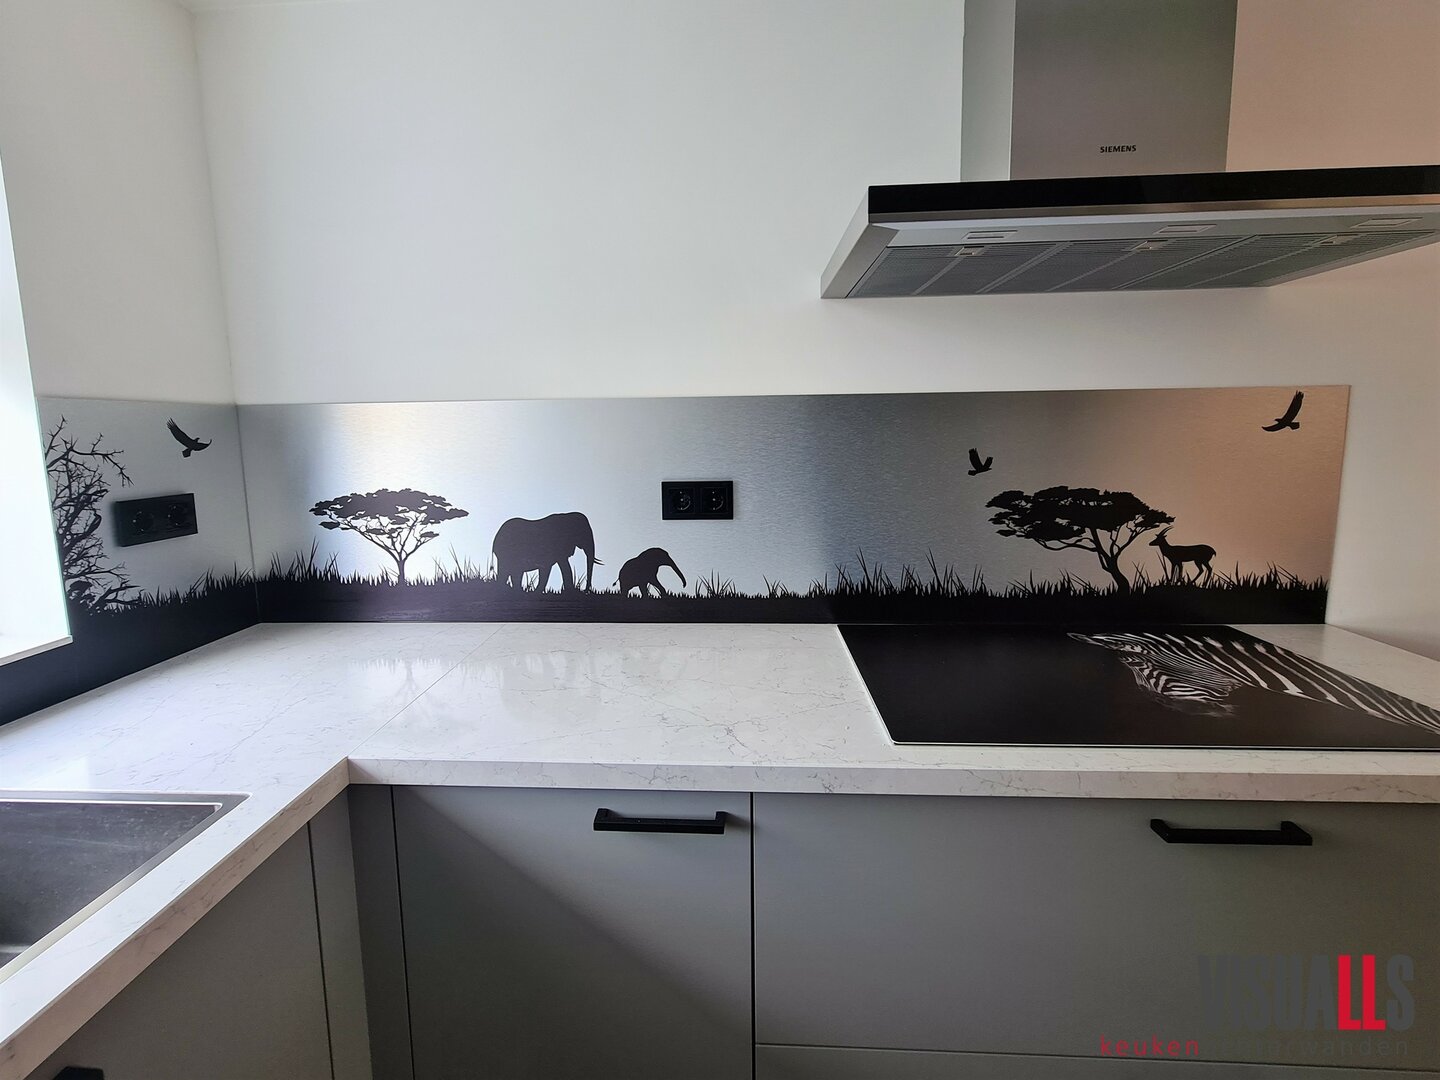 Foto: Wonennl Visuallsnl keukenachterwand dieren safari